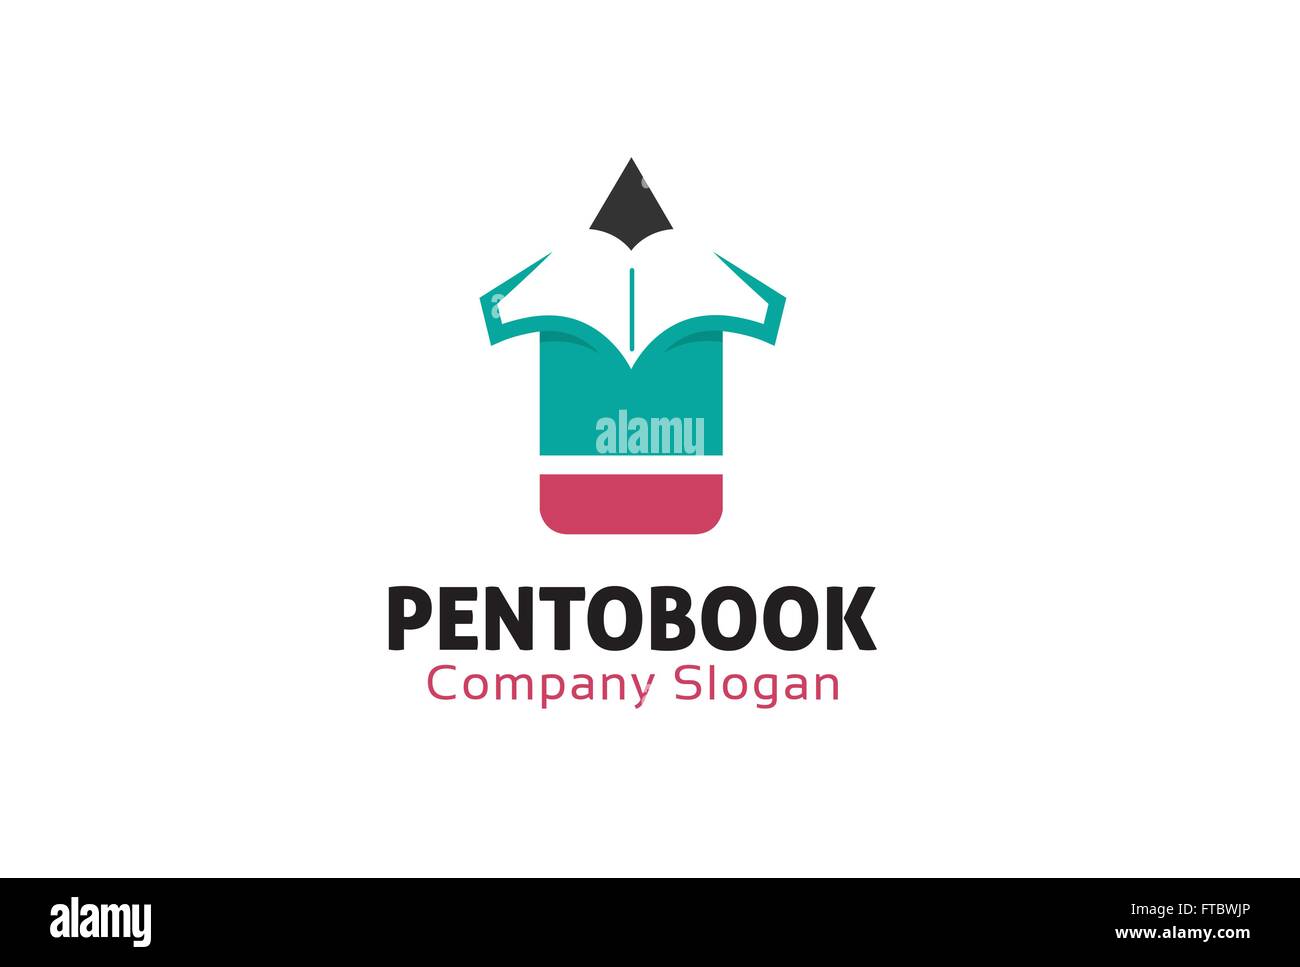 Pen To Book Design Illustration Stock Vector